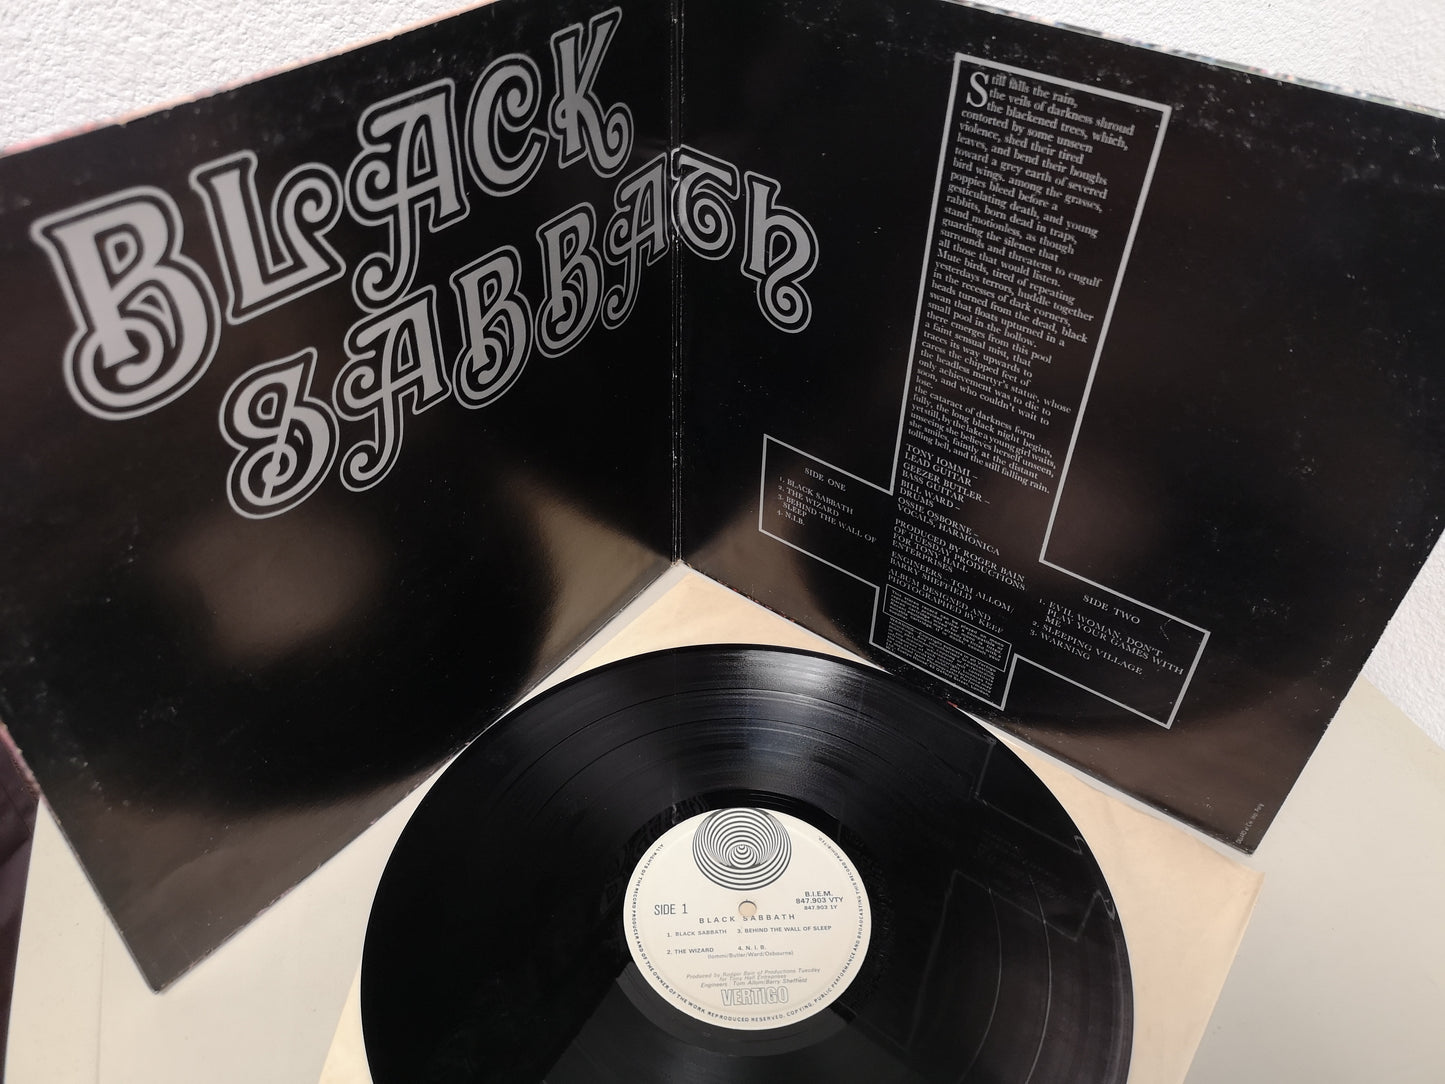 Black Sabbath "S/T" Orig France 1970 EX/VG++ (Biem)